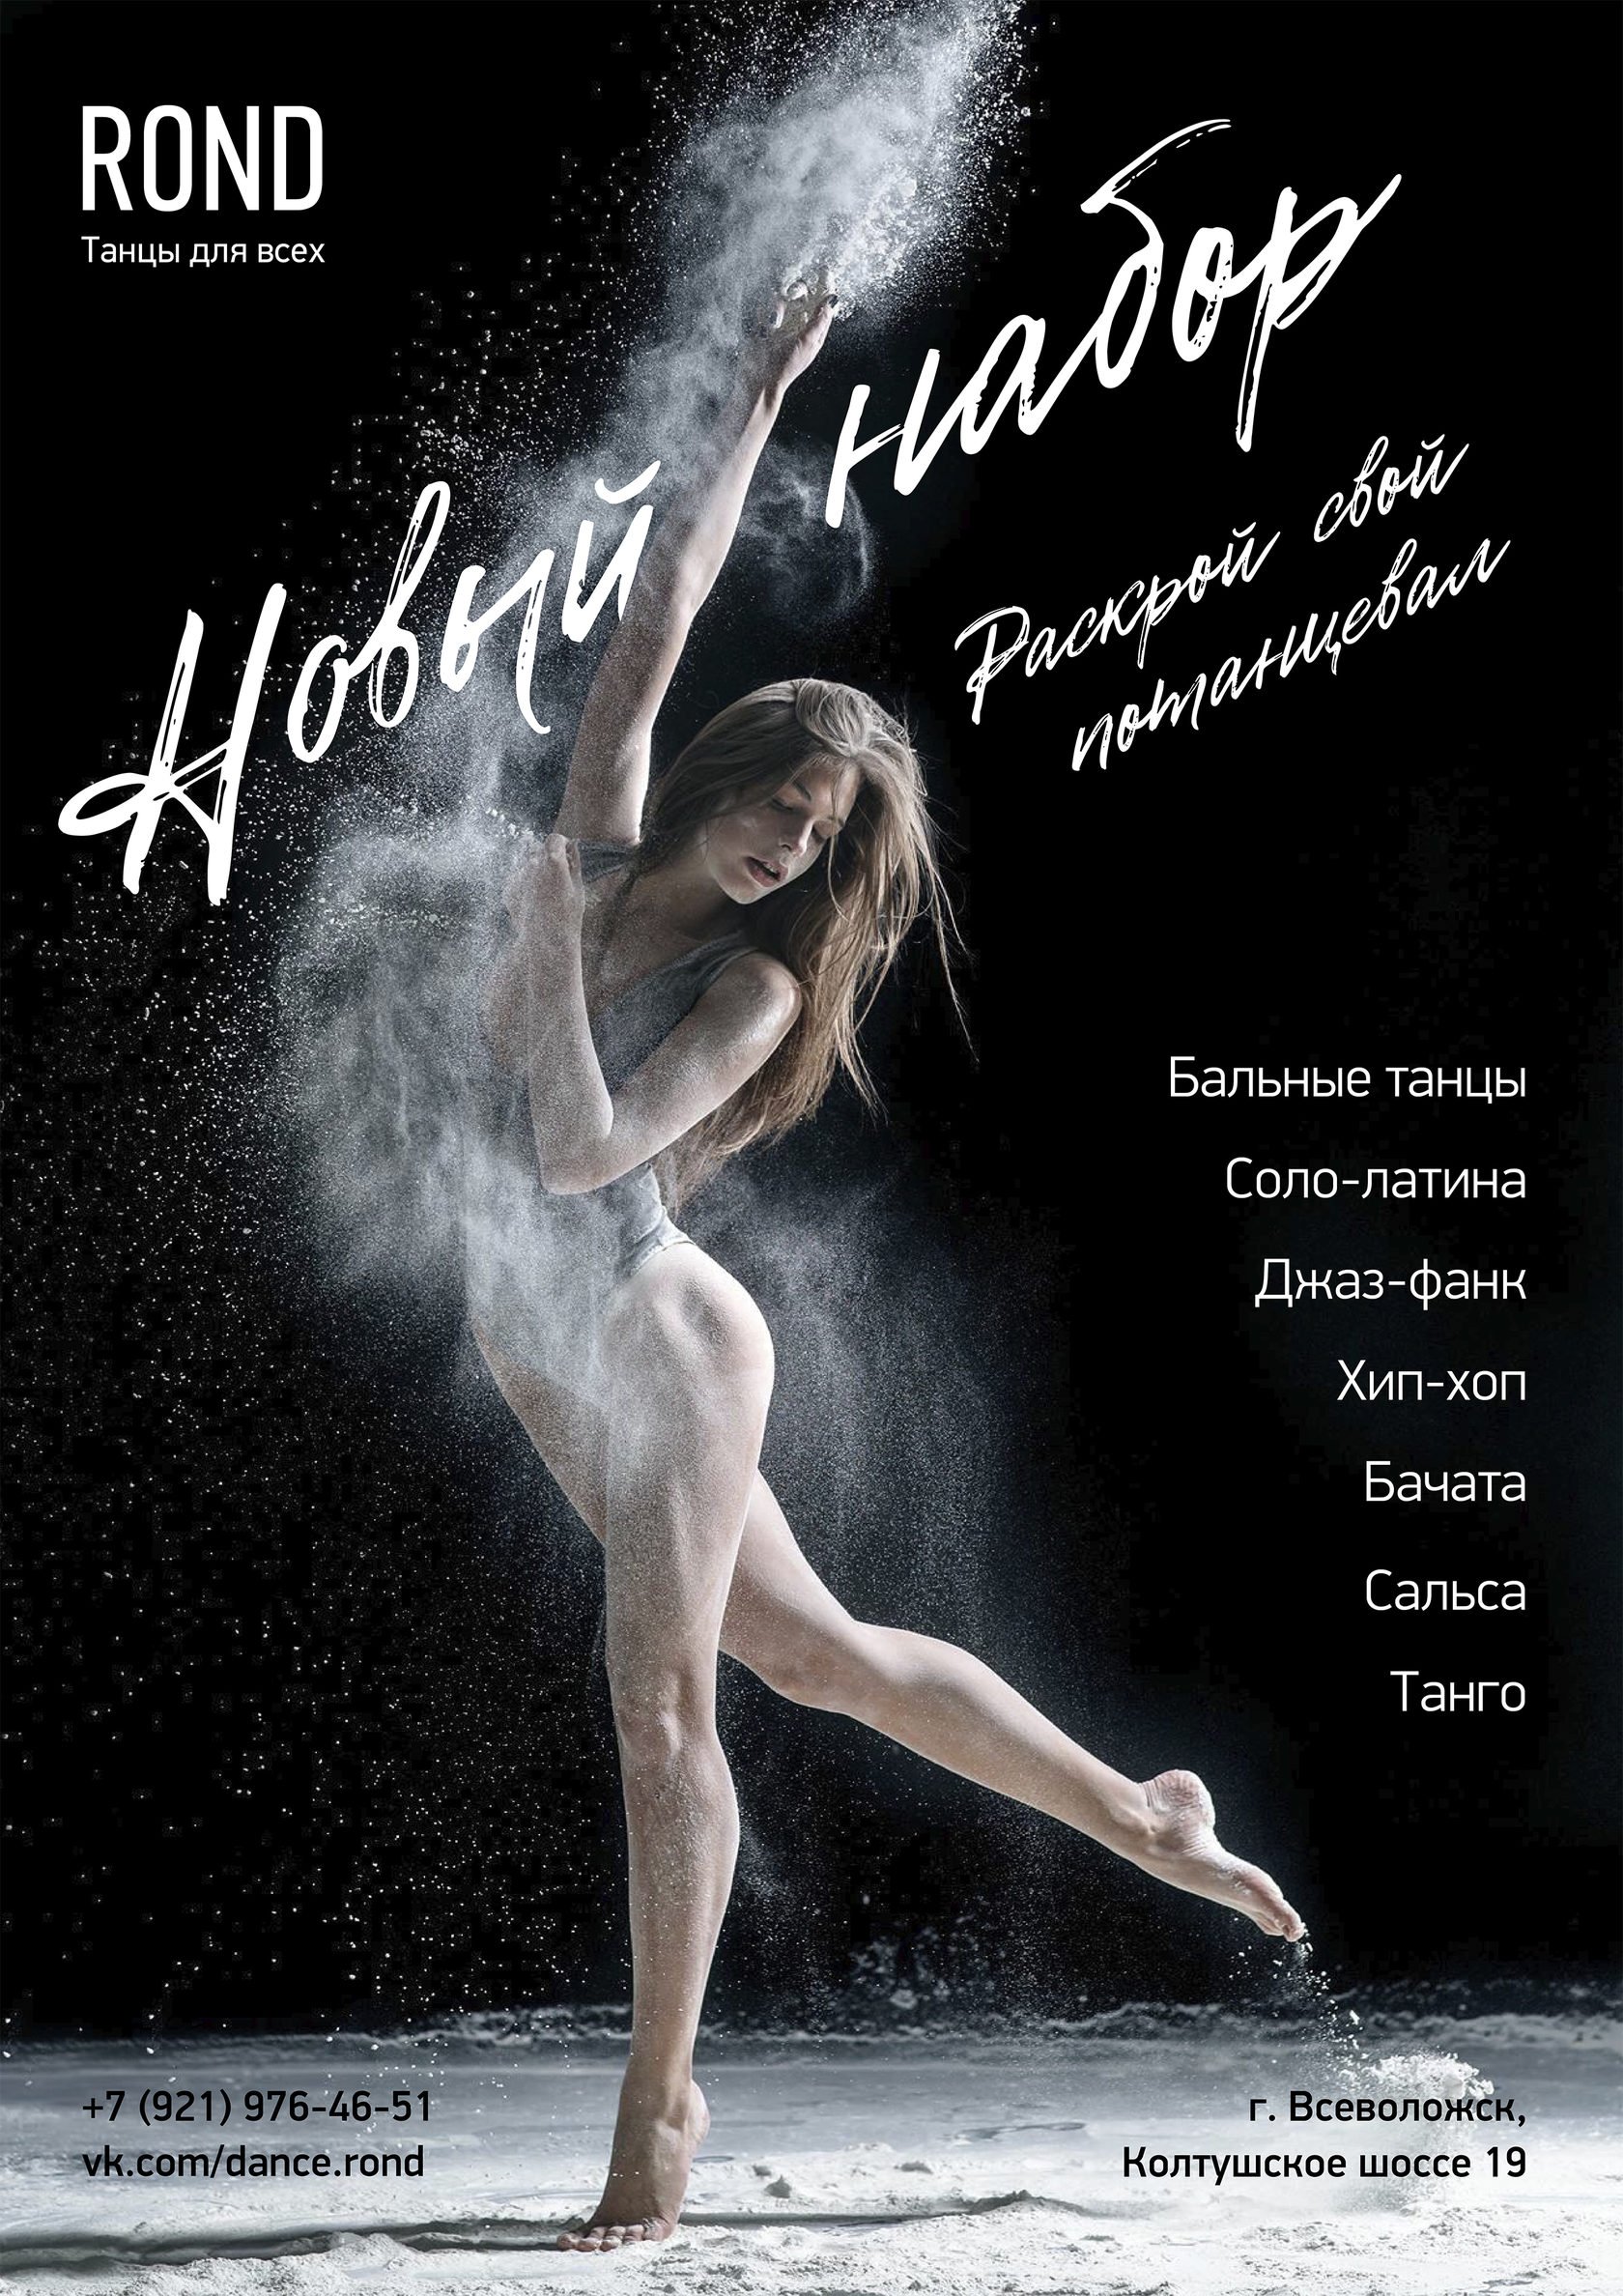 Рекламный плакат танцев